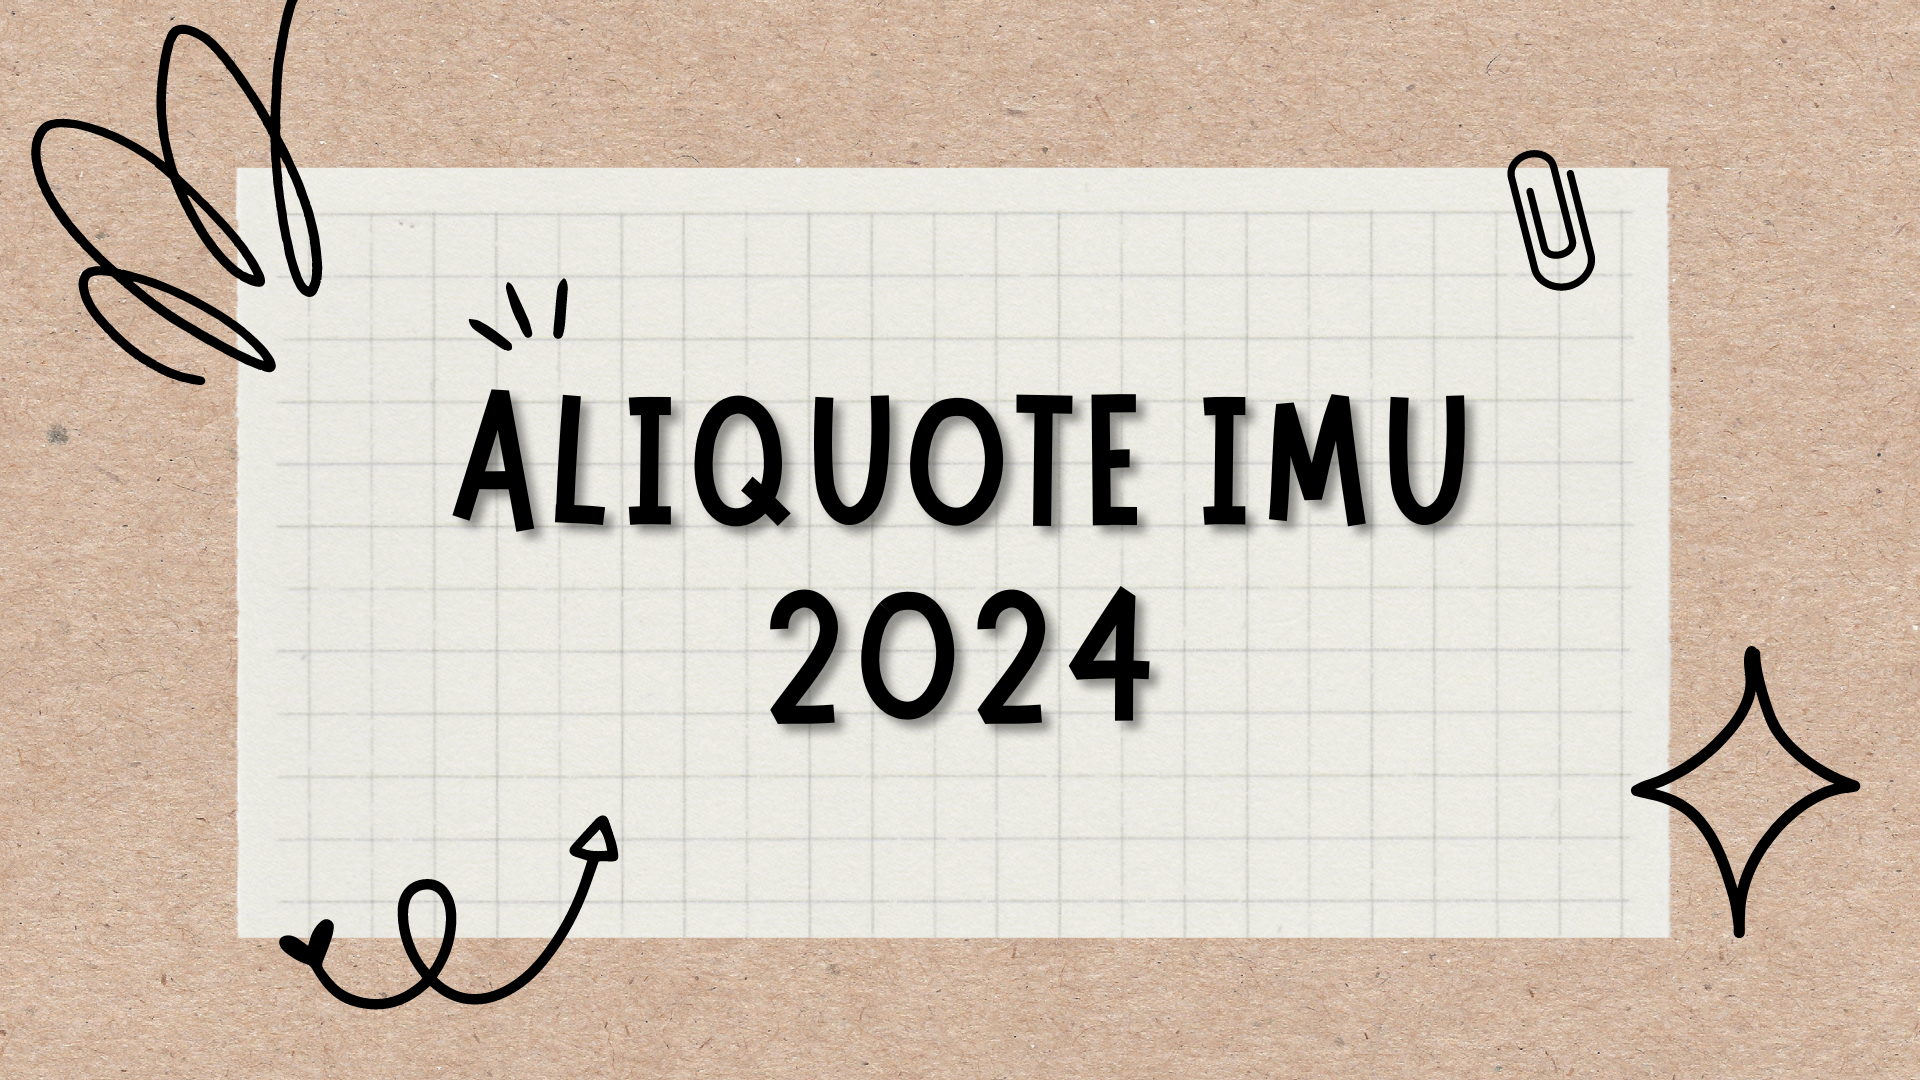 Aliquote IMU 2024